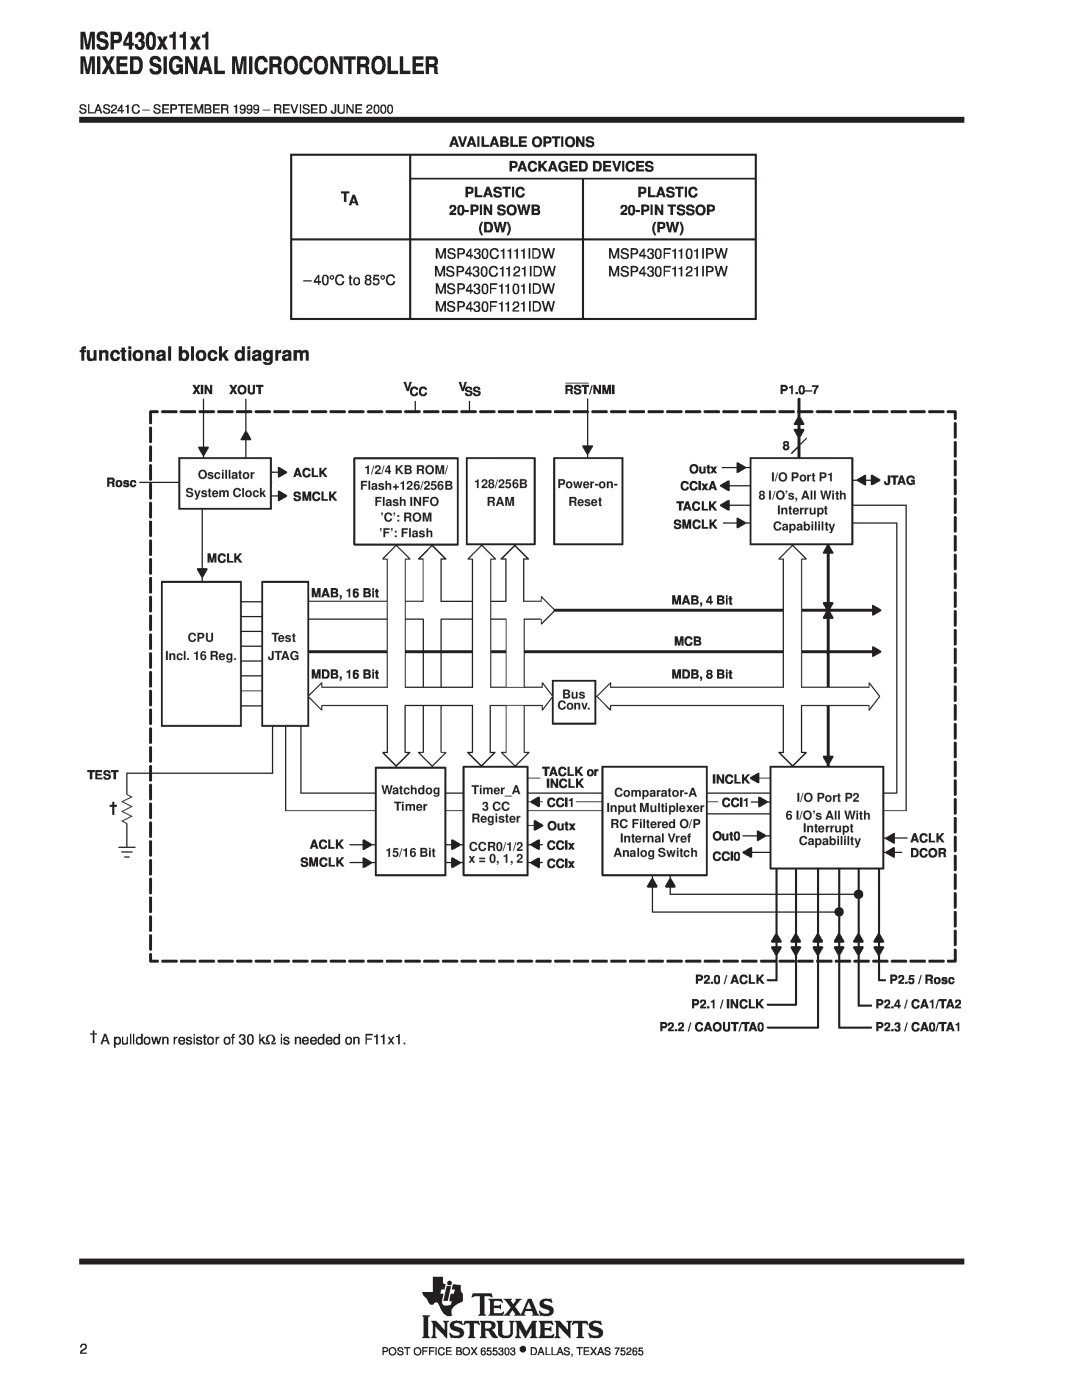 Texas Instruments warranty MSP430x11x1 MIXED SIGNAL MICROCONTROLLER, functional block diagram 